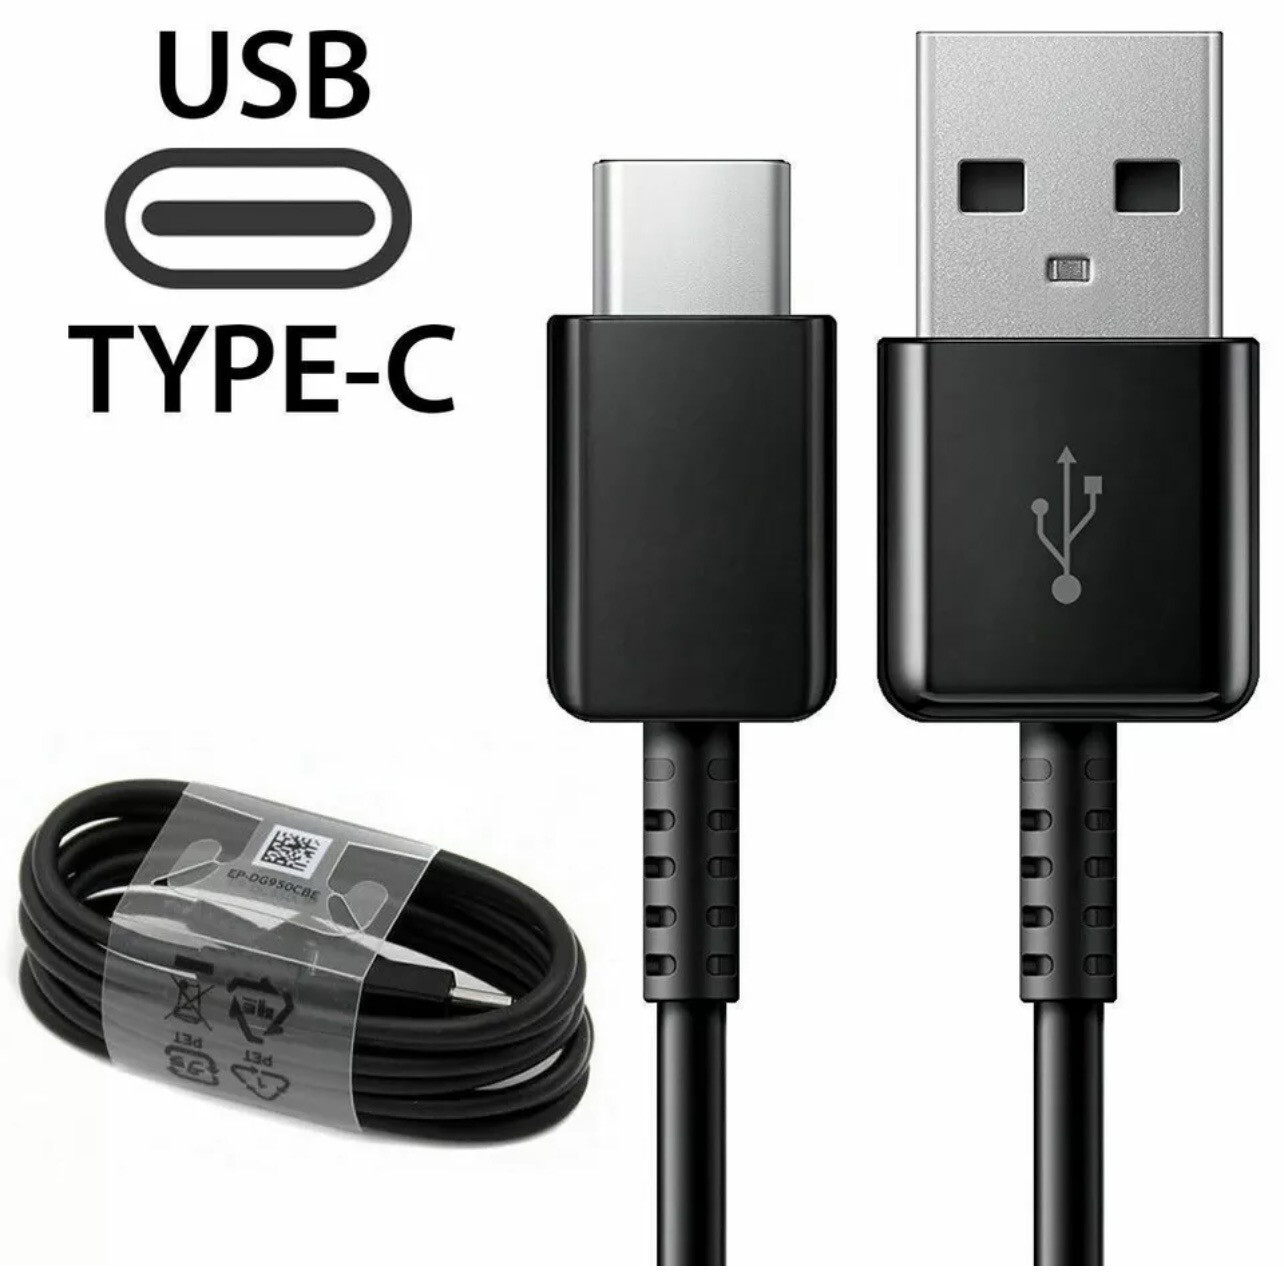 USB TYPE C (OEM SAMSUNG)